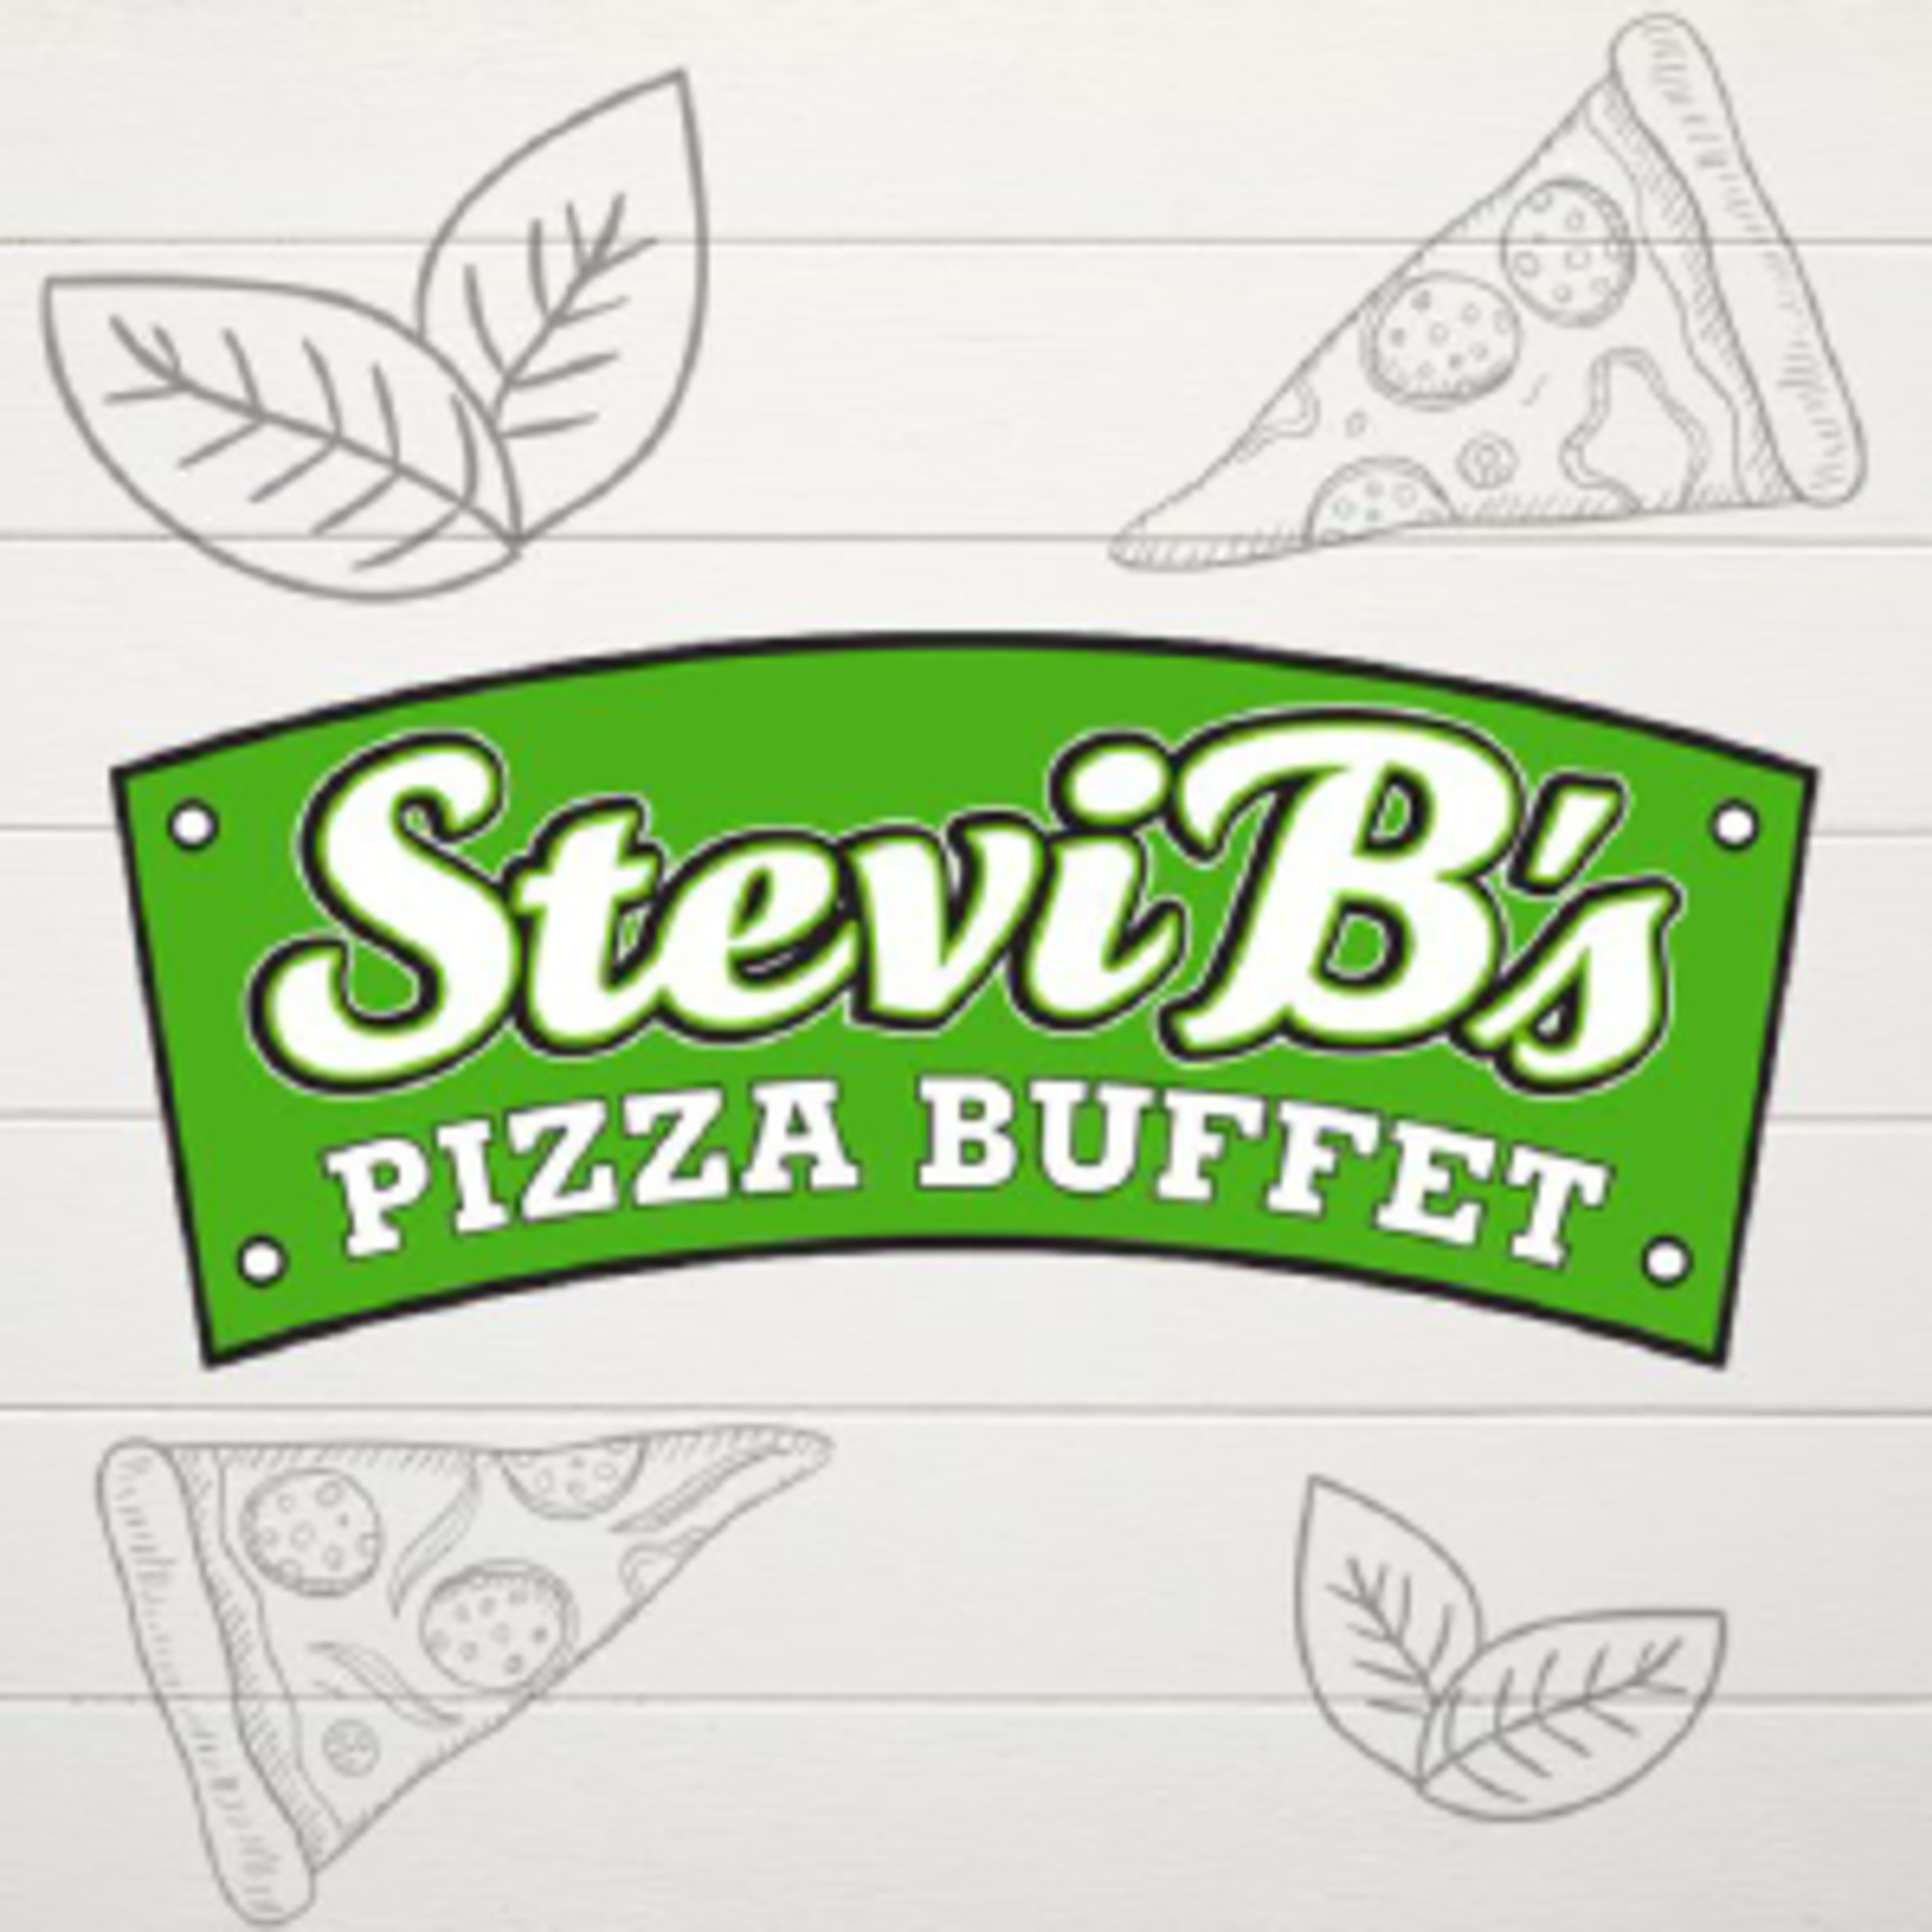 Stevi B's PizzaCode